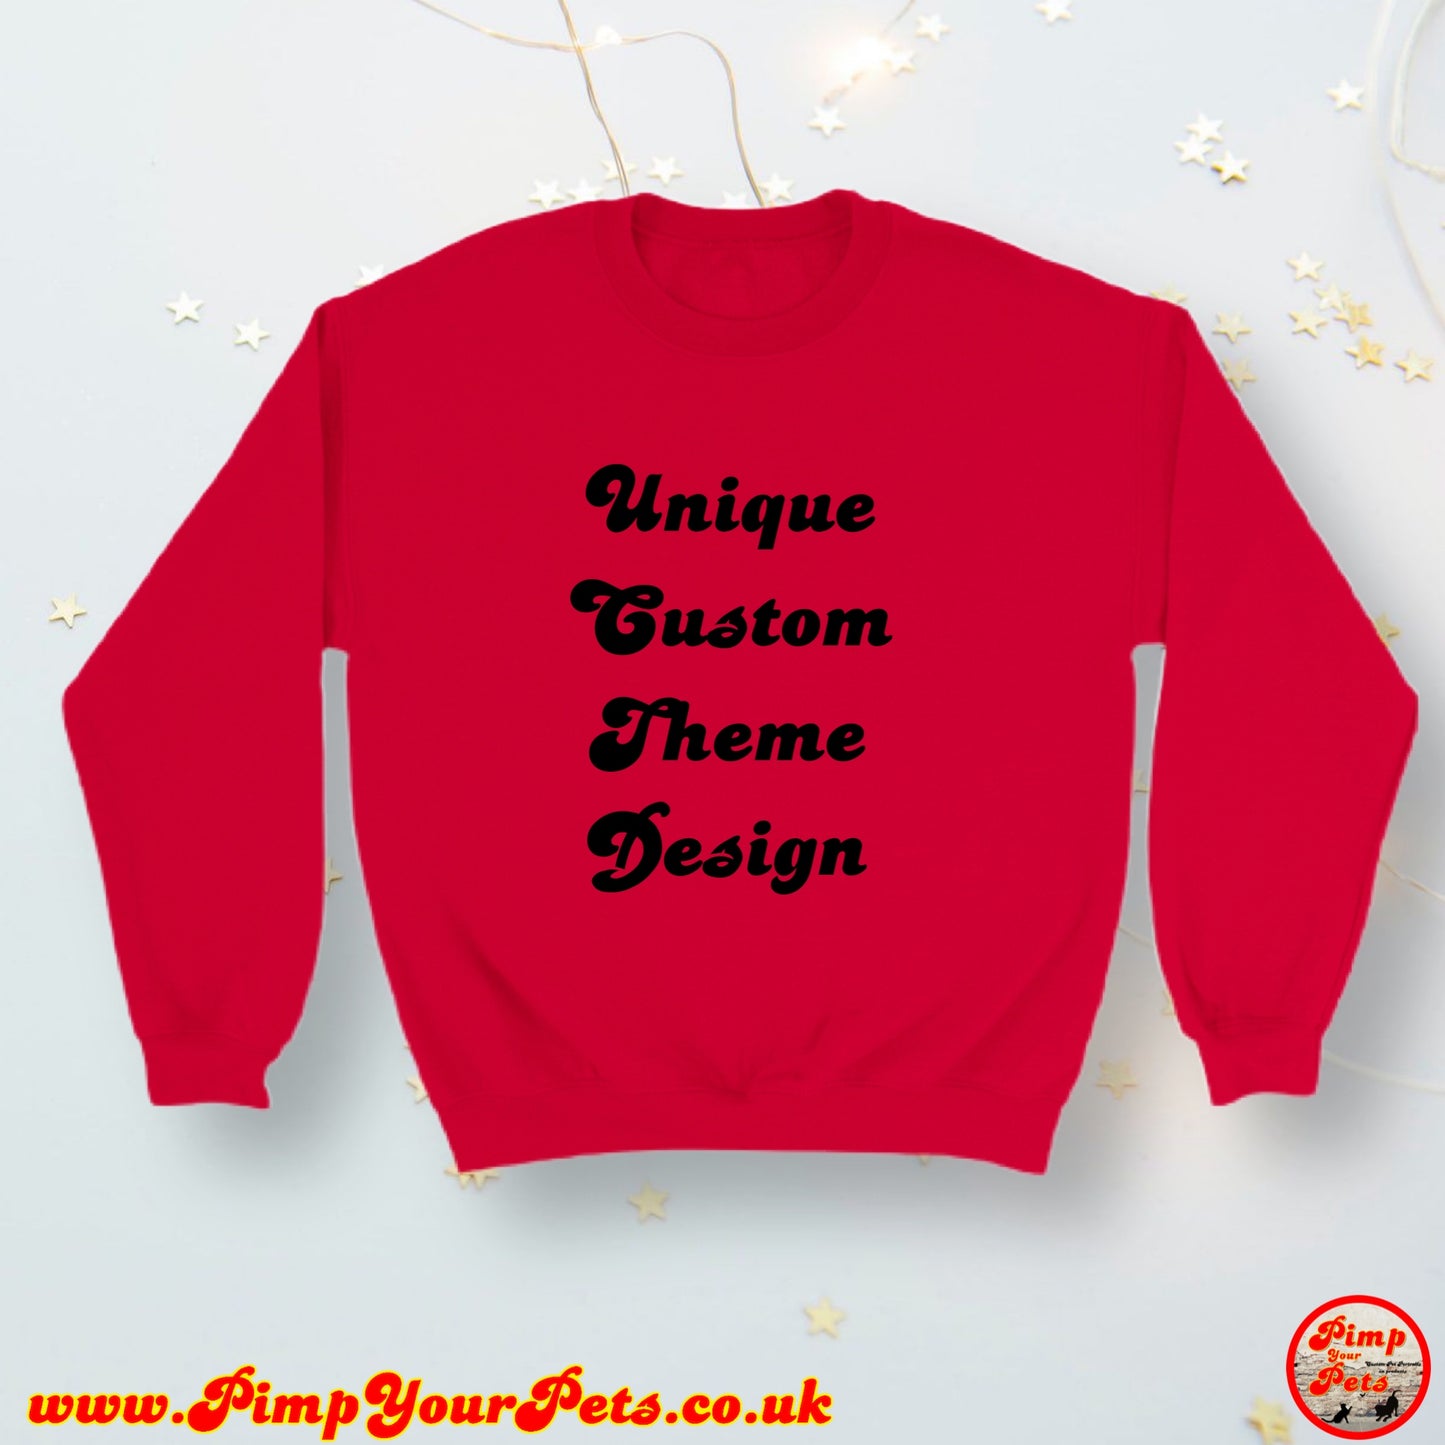 Your Unique Custom Theme Design on Sweatshirts ( Unisex Fit )